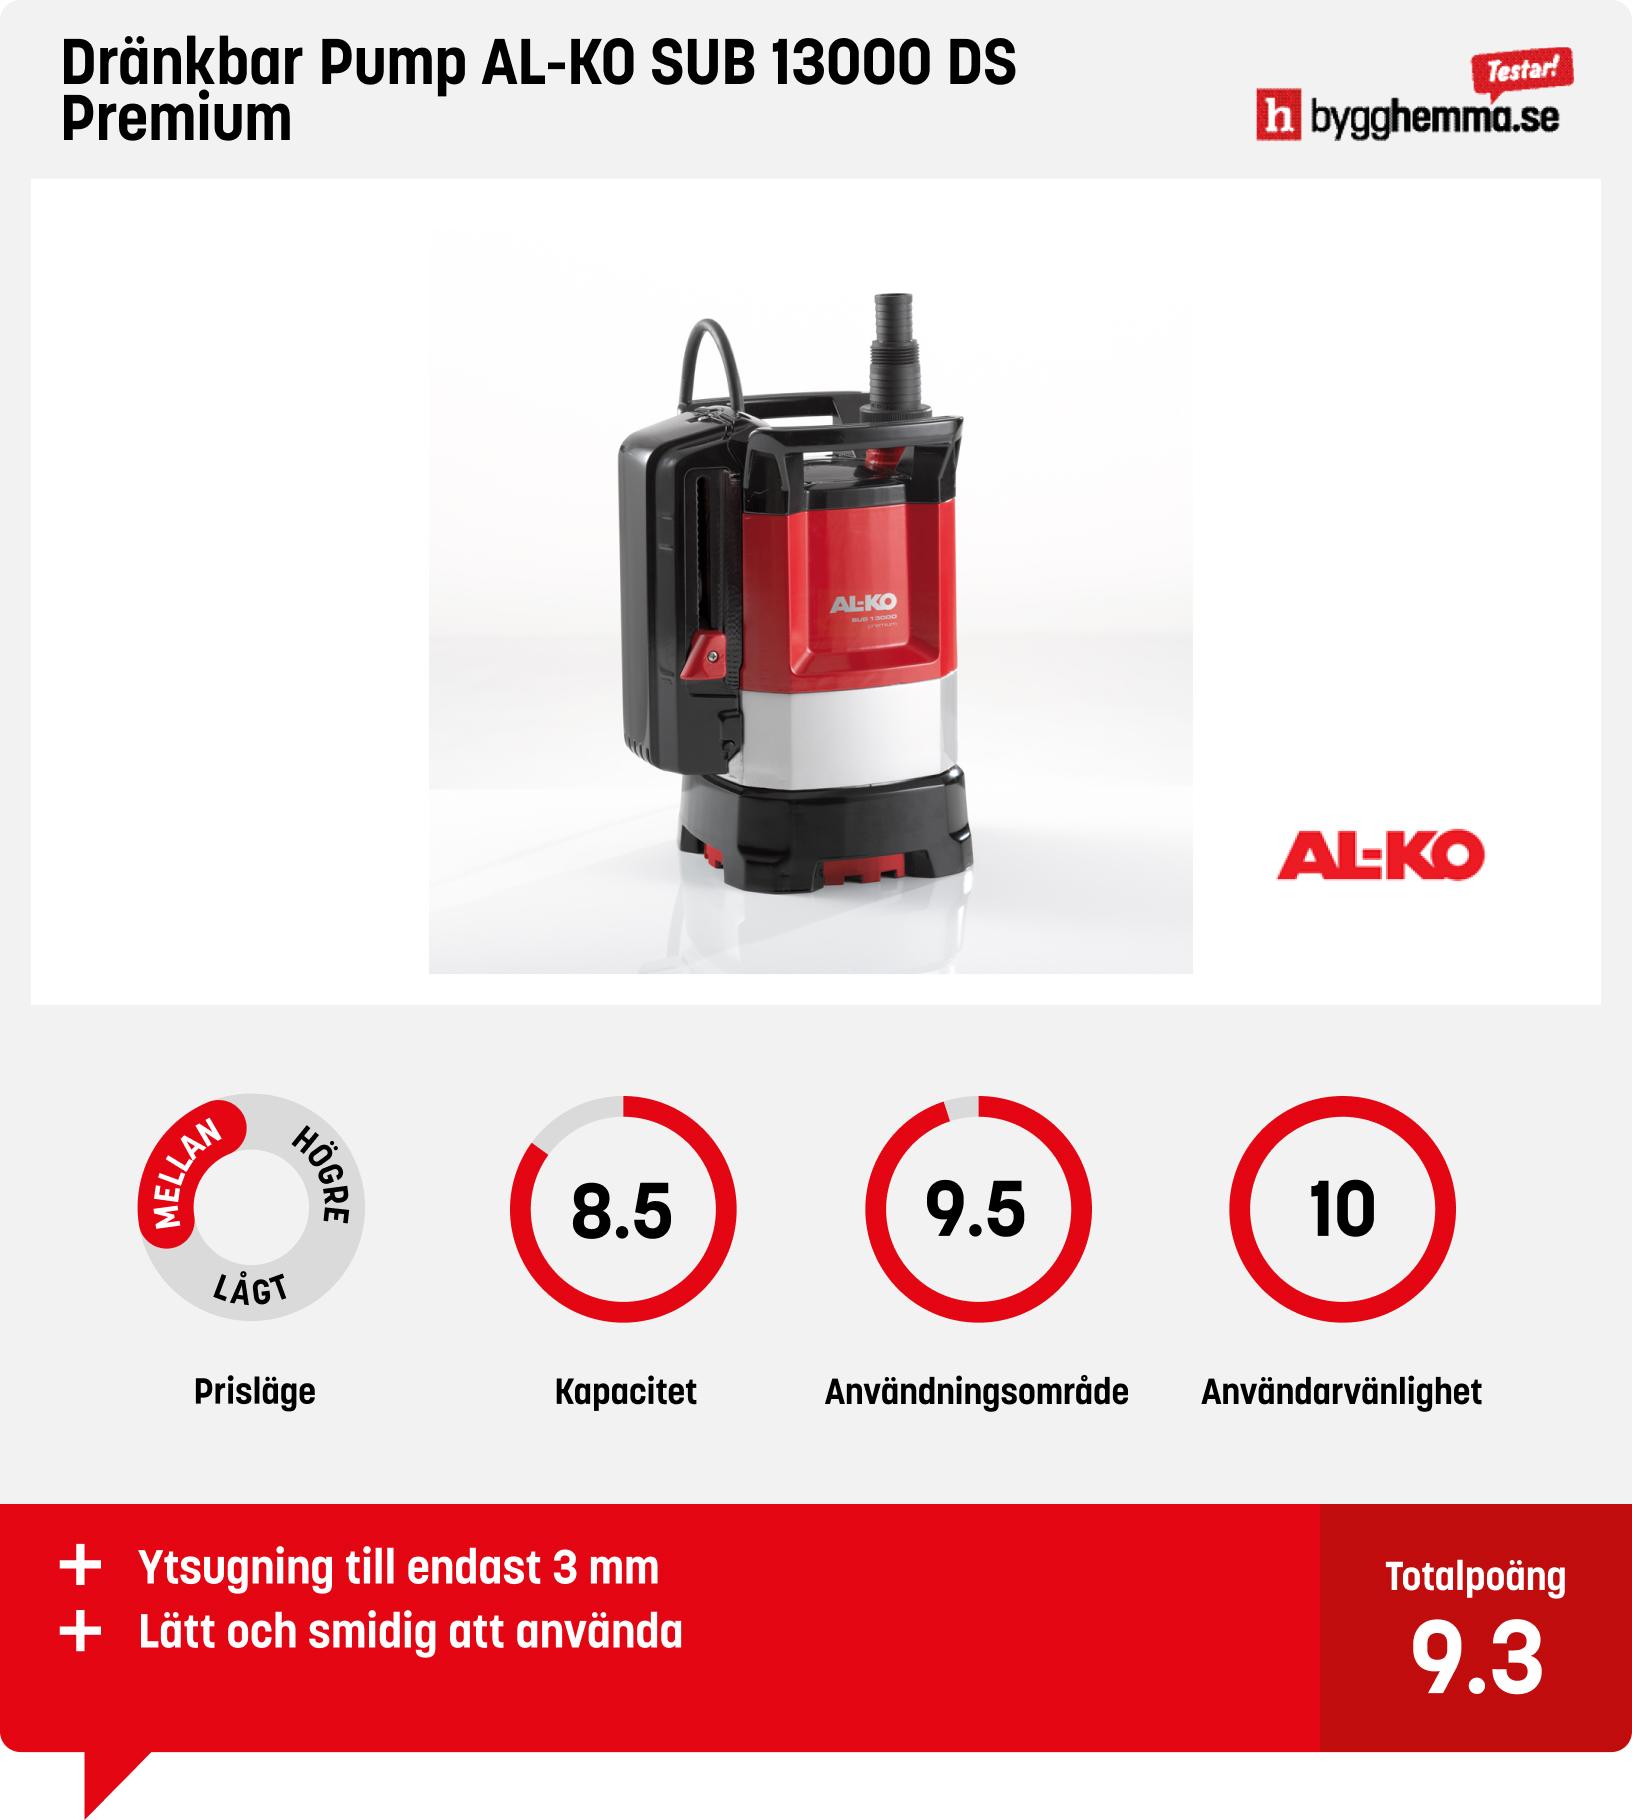 Dränkbar pump bäst i test - Dränkbar Pump AL-KO SUB 13000 DS Premium